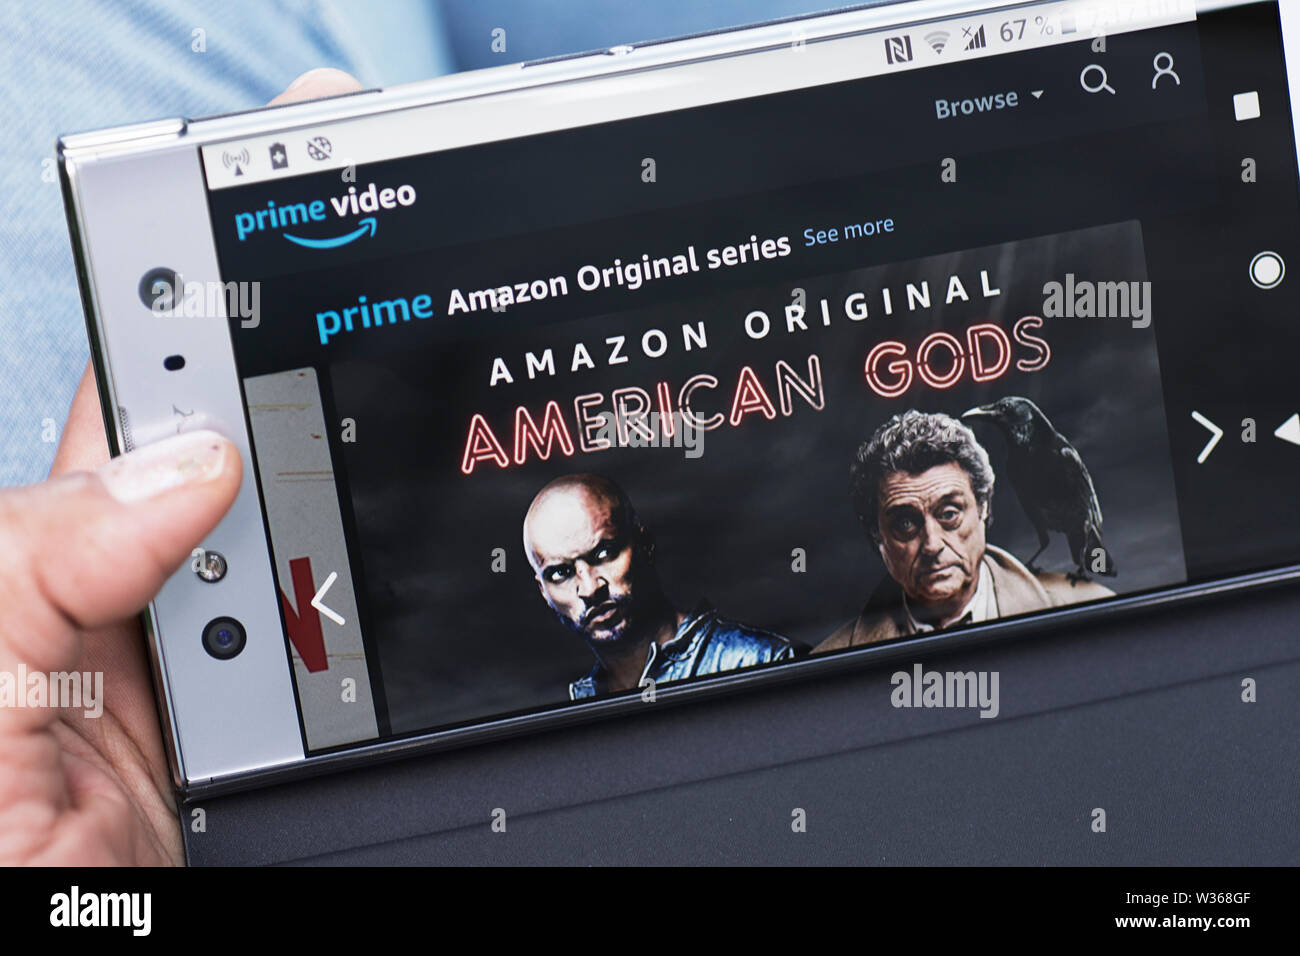 Amazon PrimeVideo, Prime Amazon Original Series, American Gods Movie streaming website onSmartphone Mobile Phone screen Stock Photo